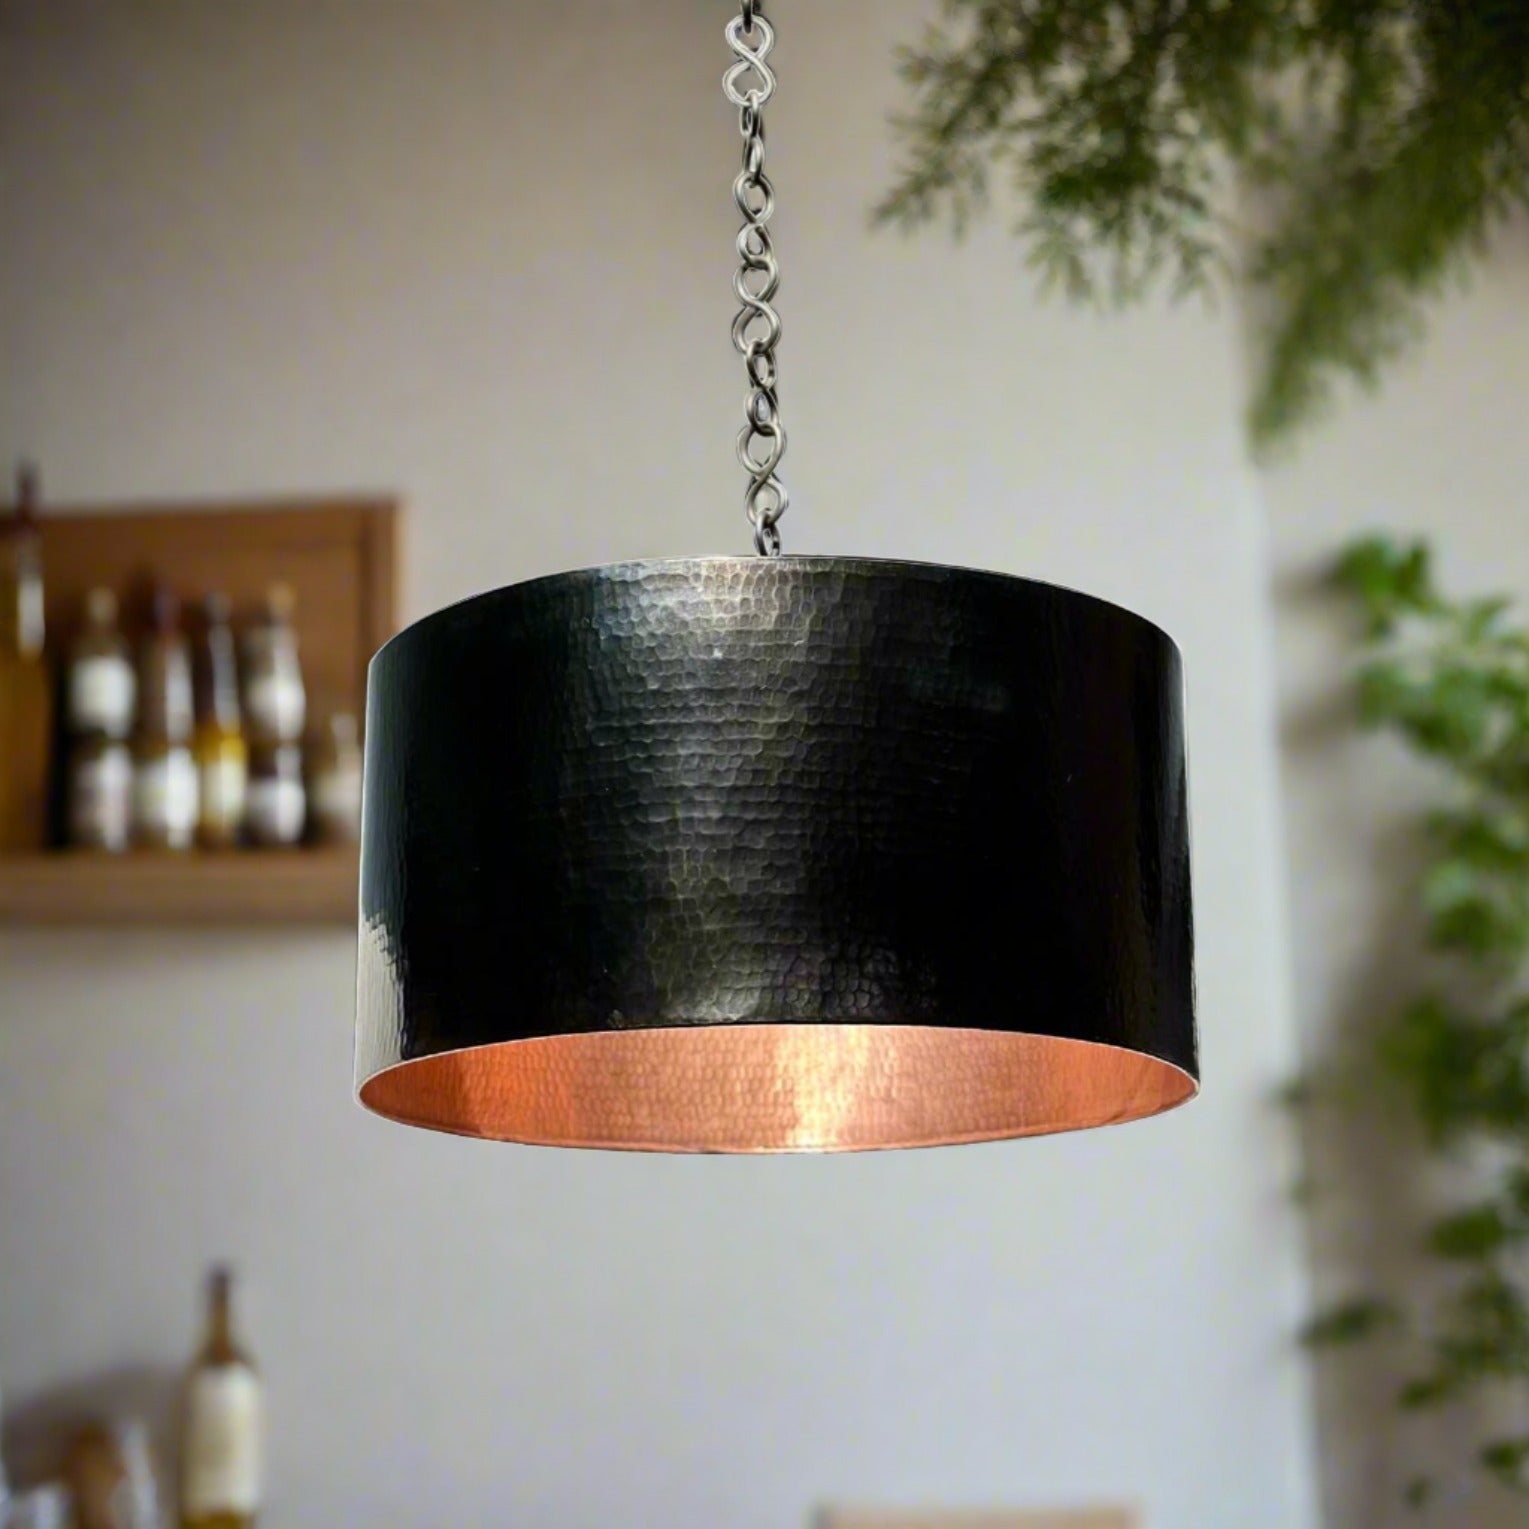 Copper kitchen pendant light